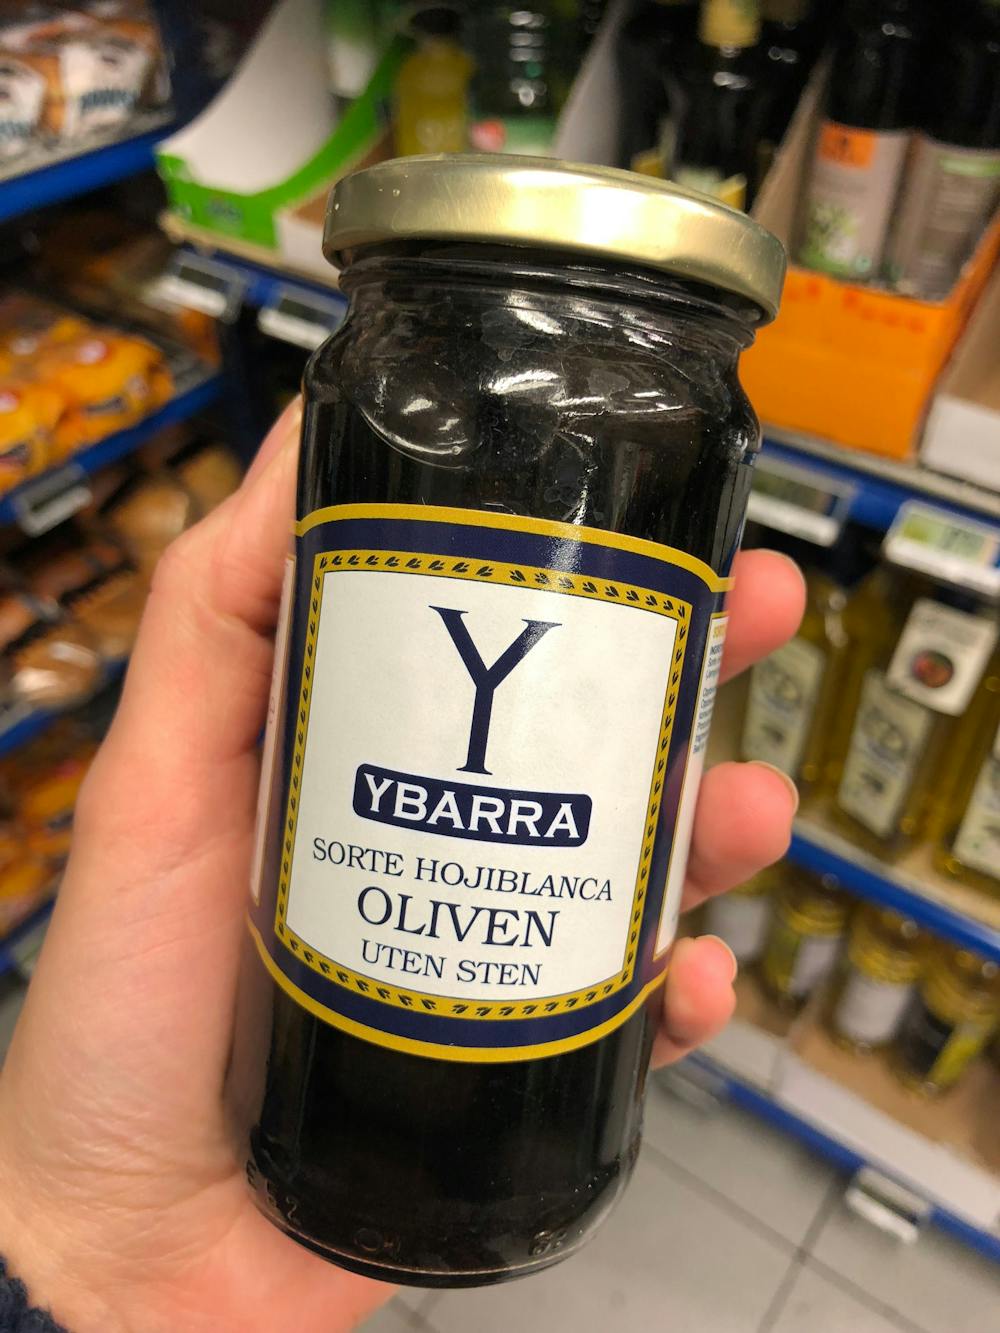 Sorte hojiblanca oliven uten sten, Ybarra